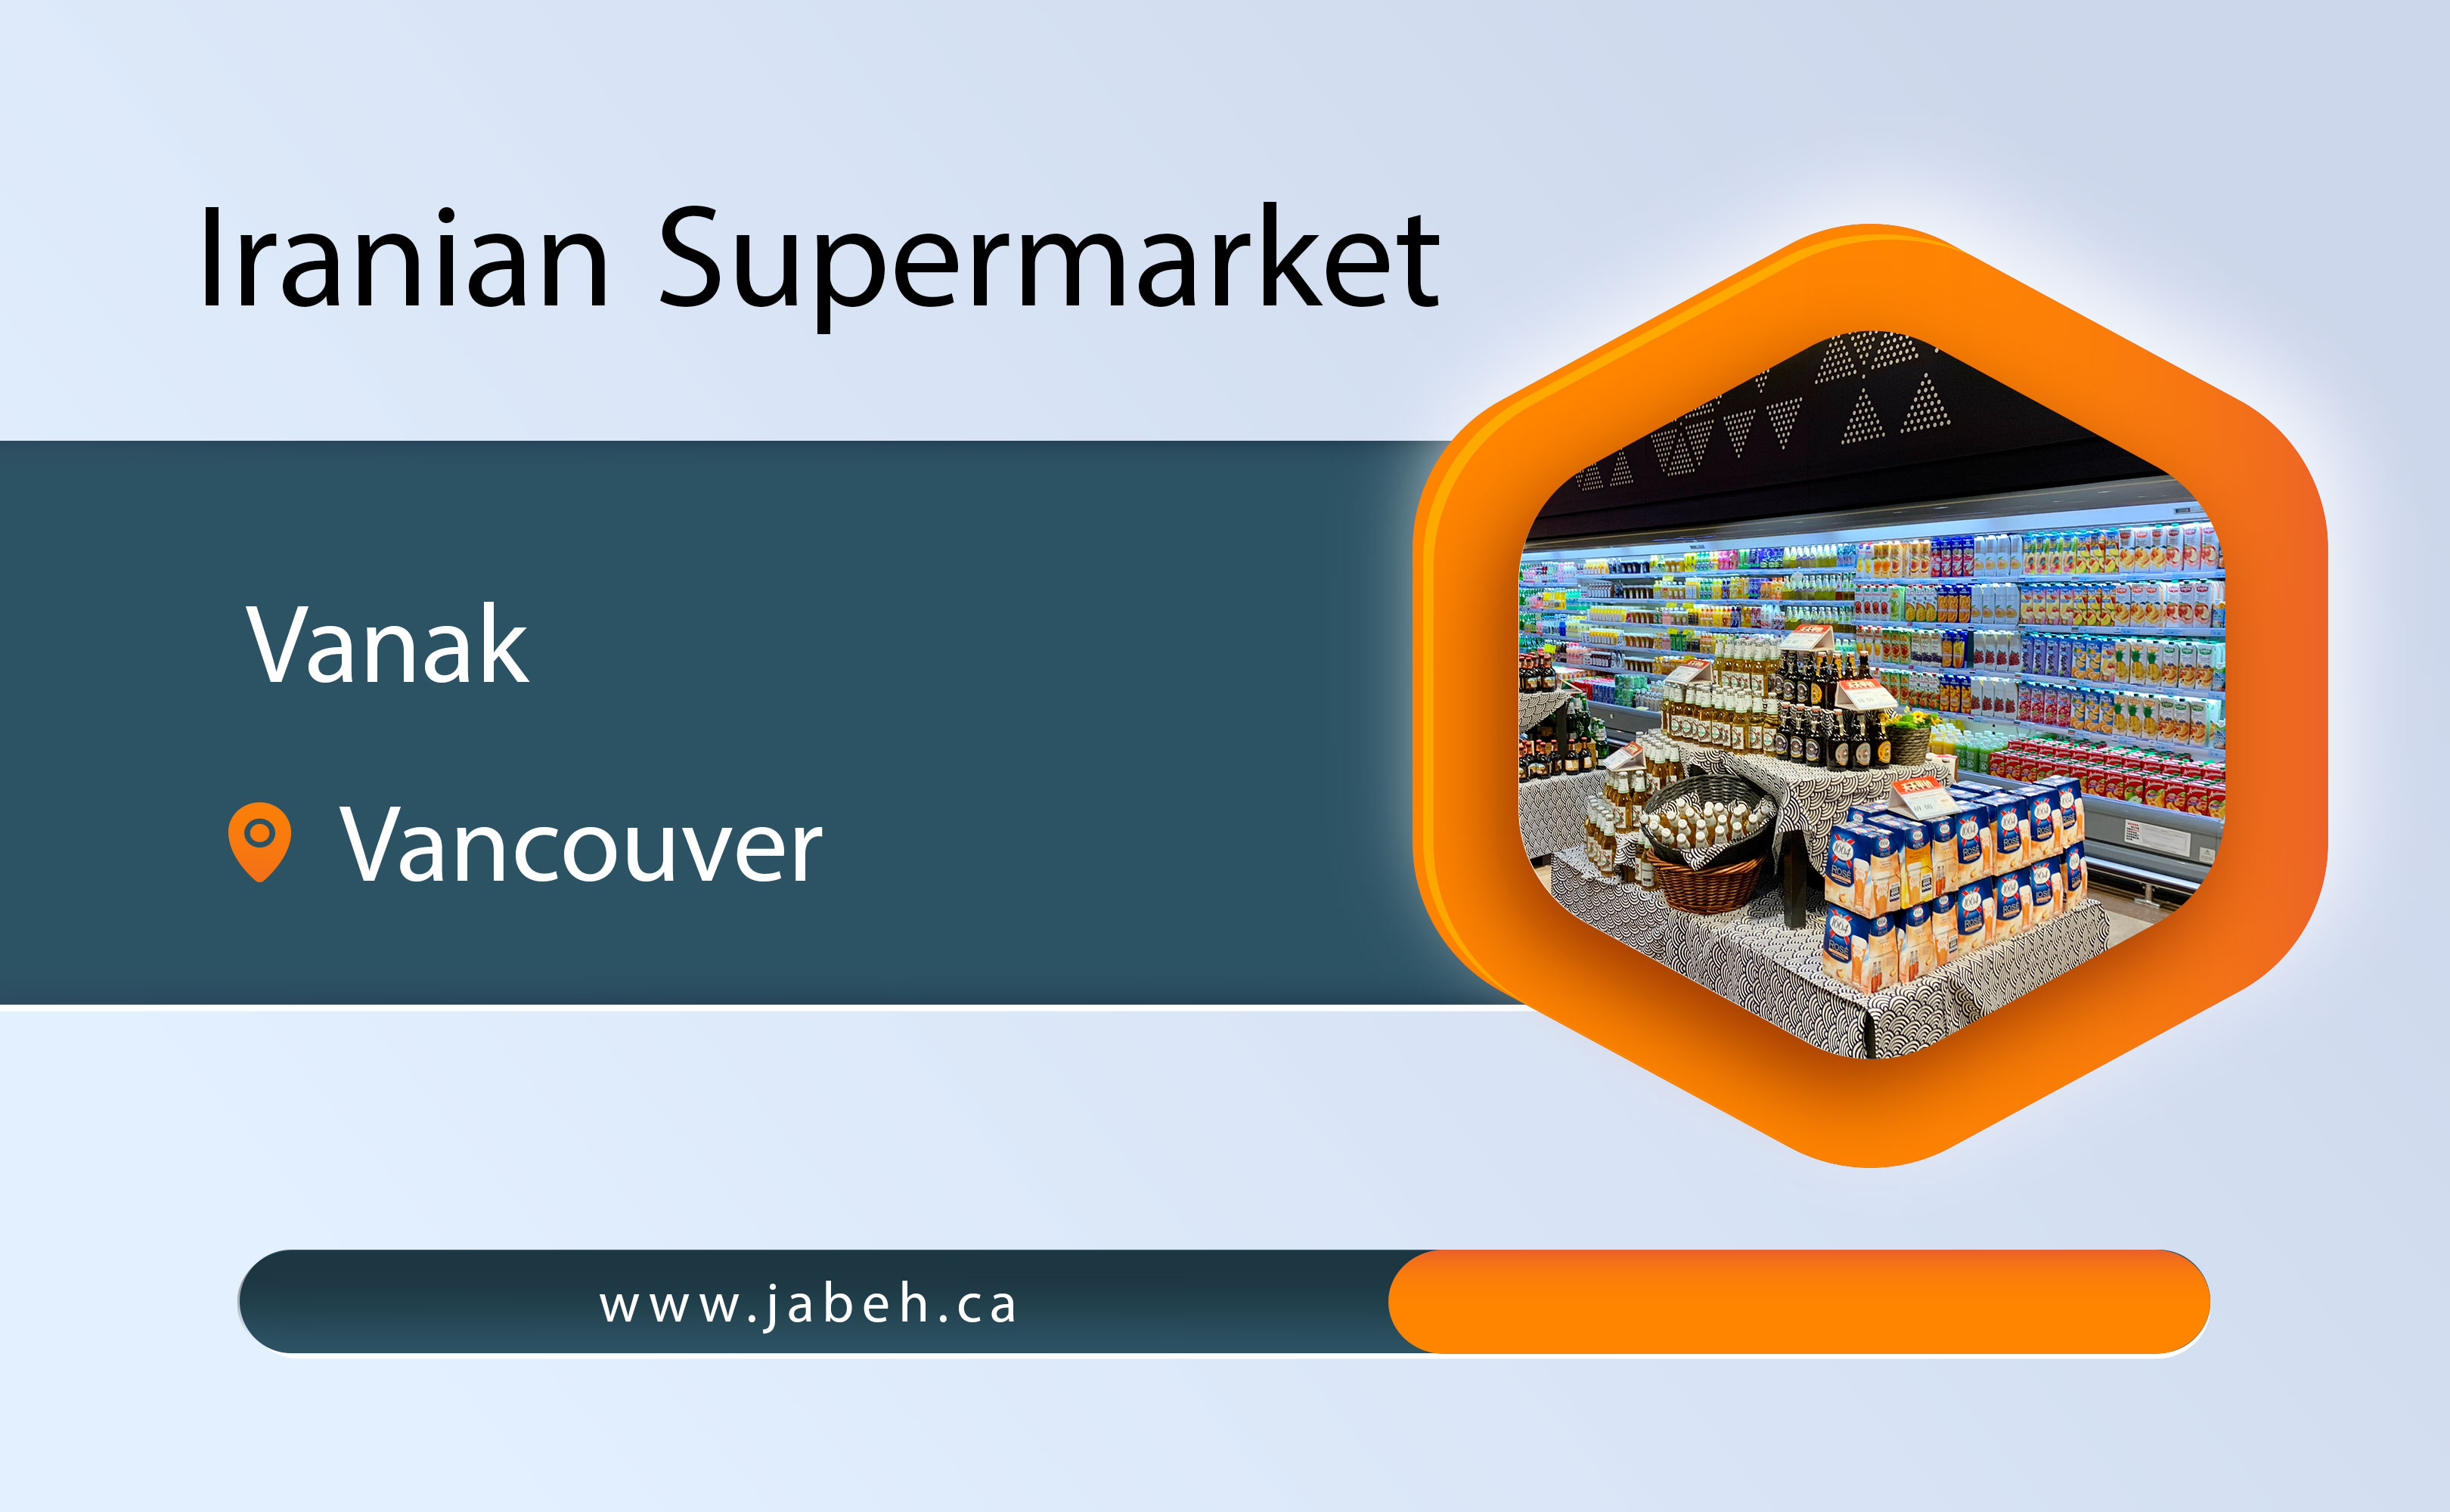 Vank Iranian supermarket in Vancouver